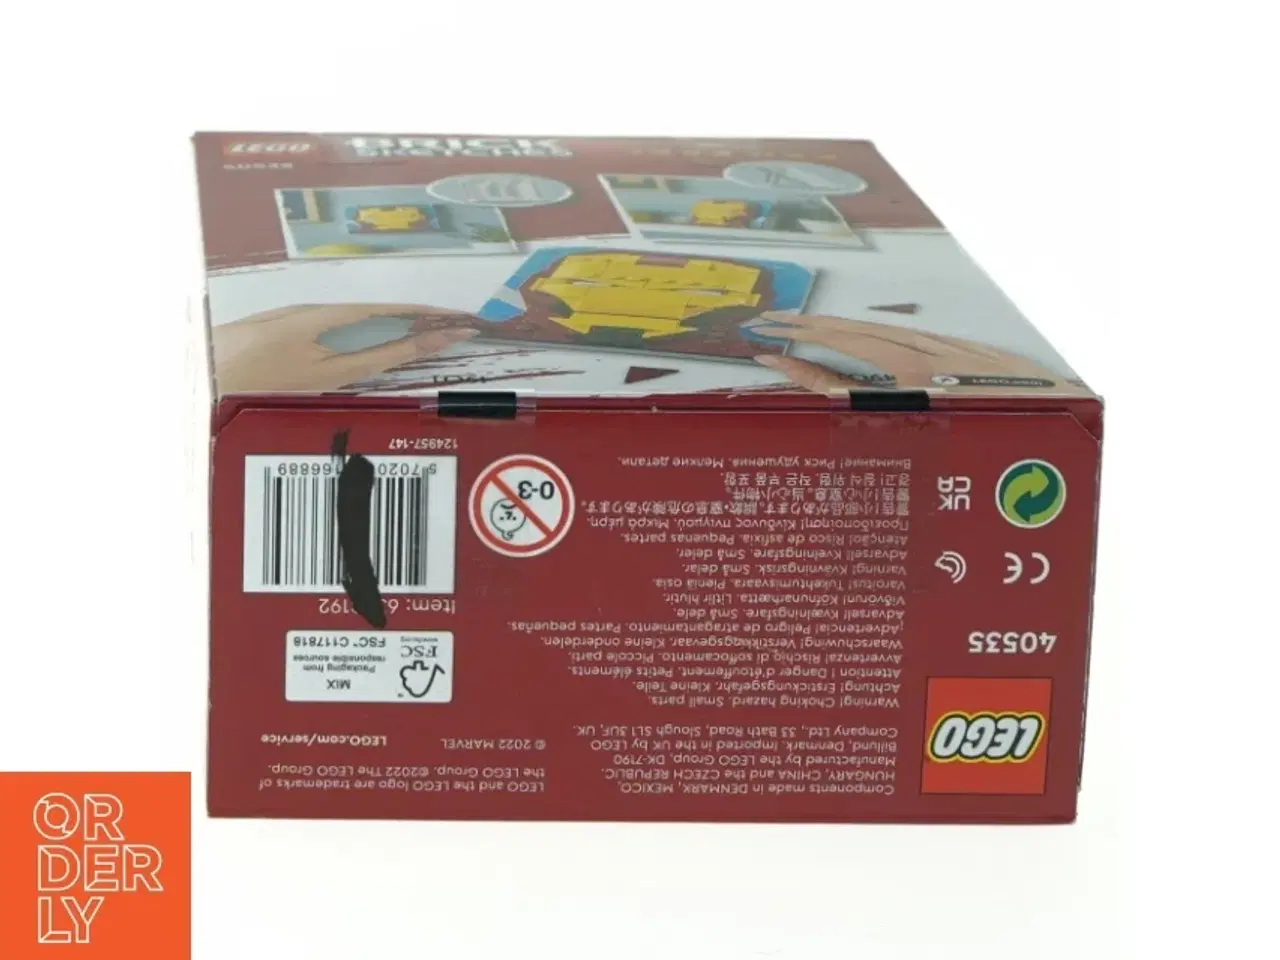 Billede 3 - Ironman model 40535 fra Lego (str. 19 x 14 cm)